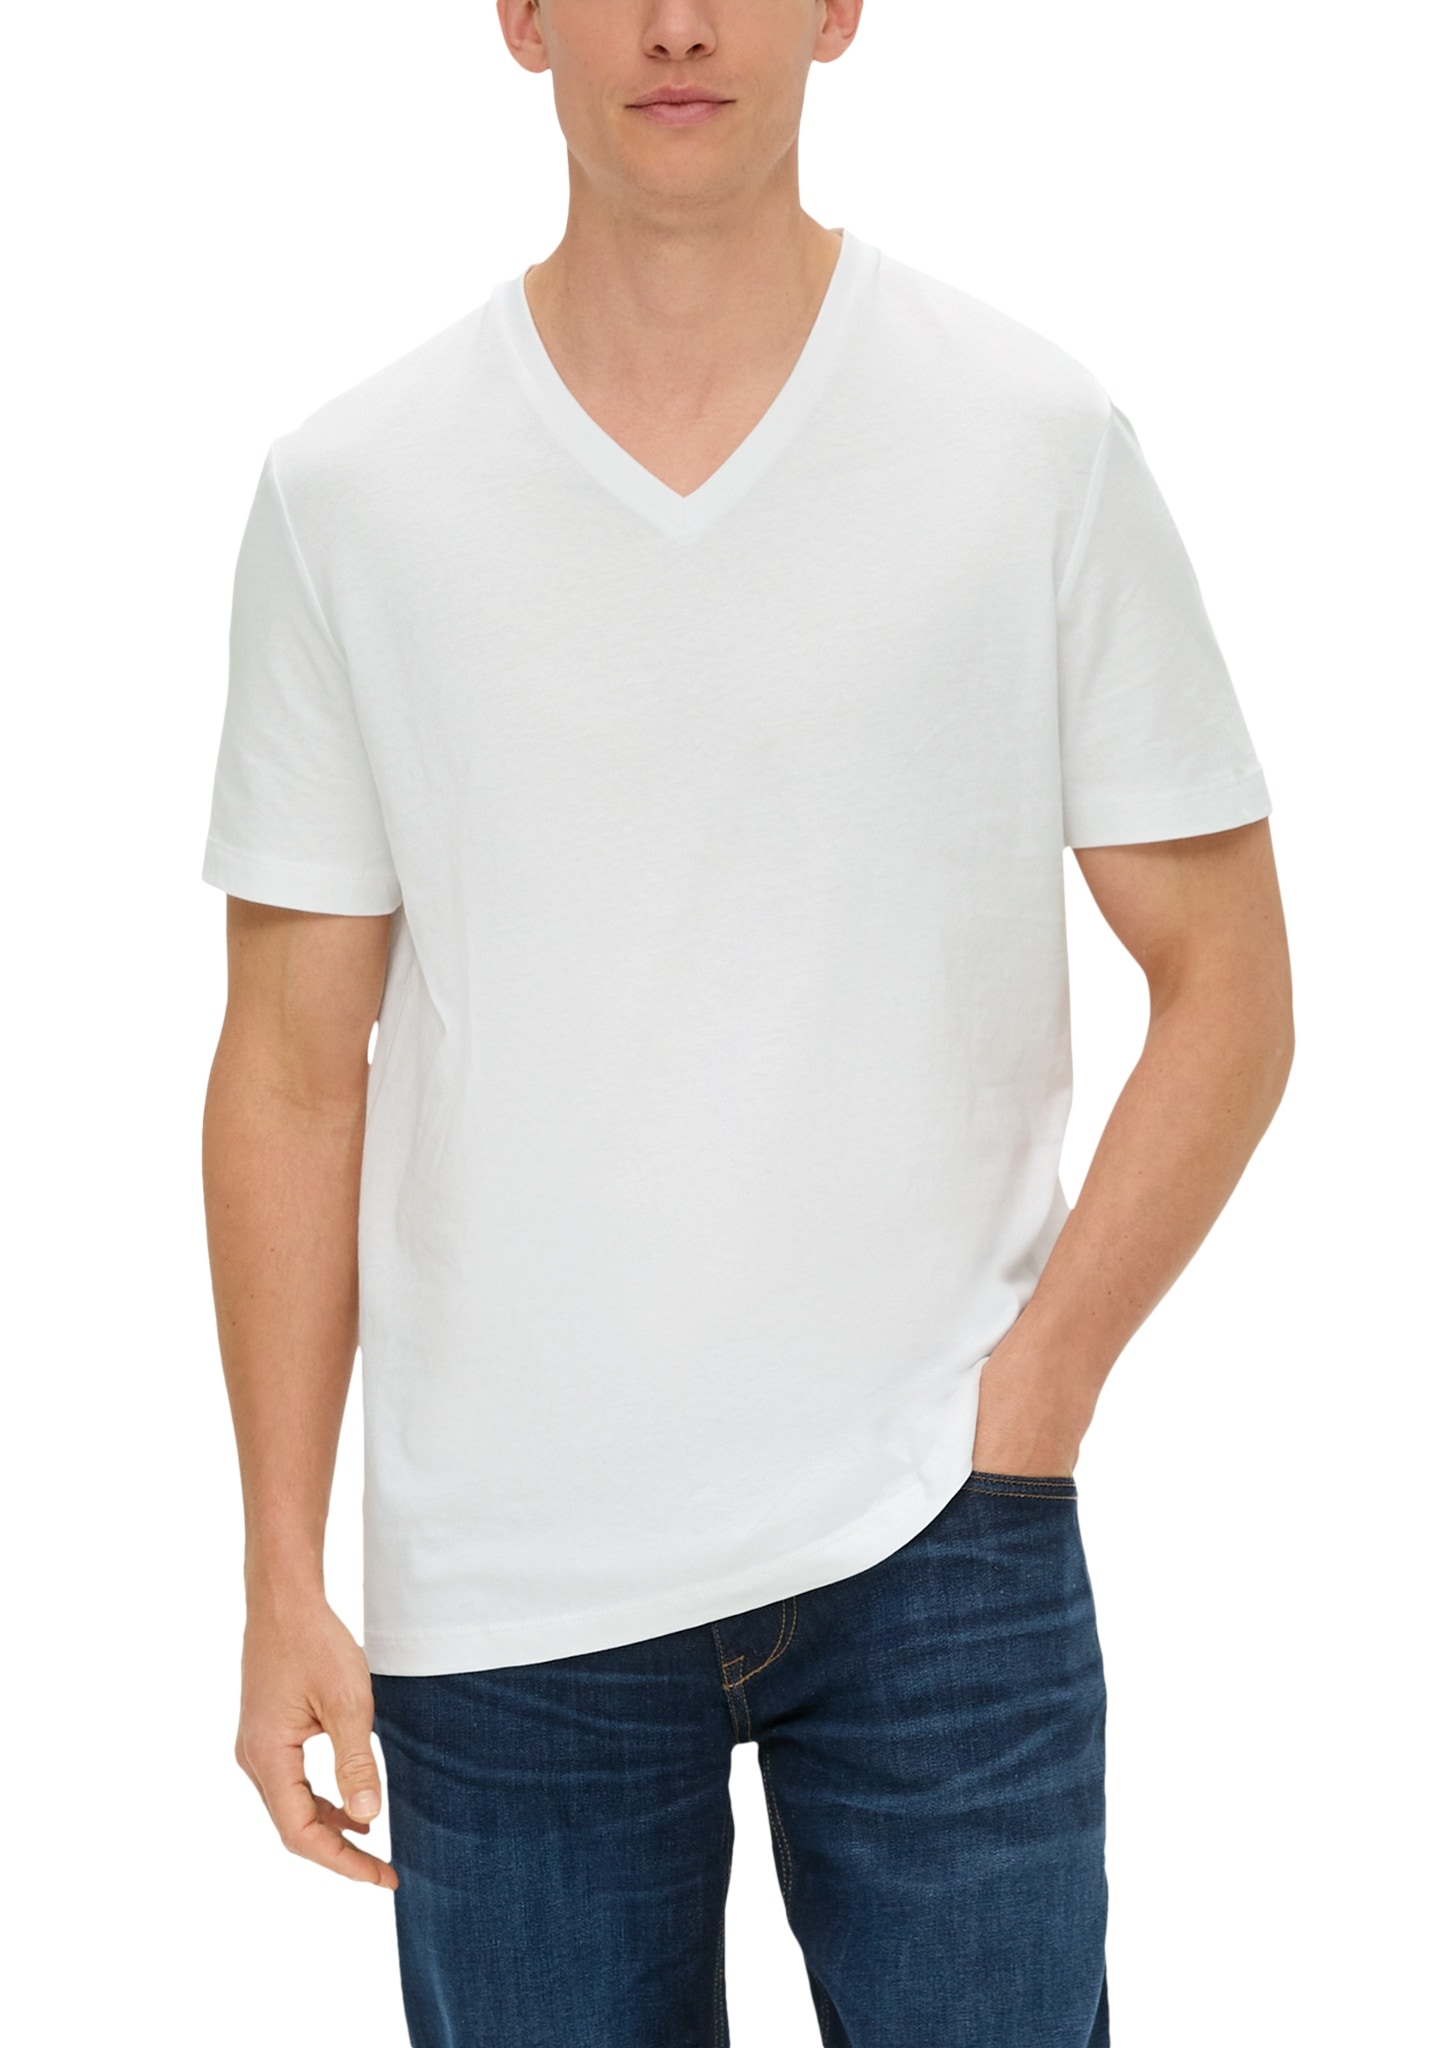 s.Oliver V-Shirt, aus reiner Baumwolle